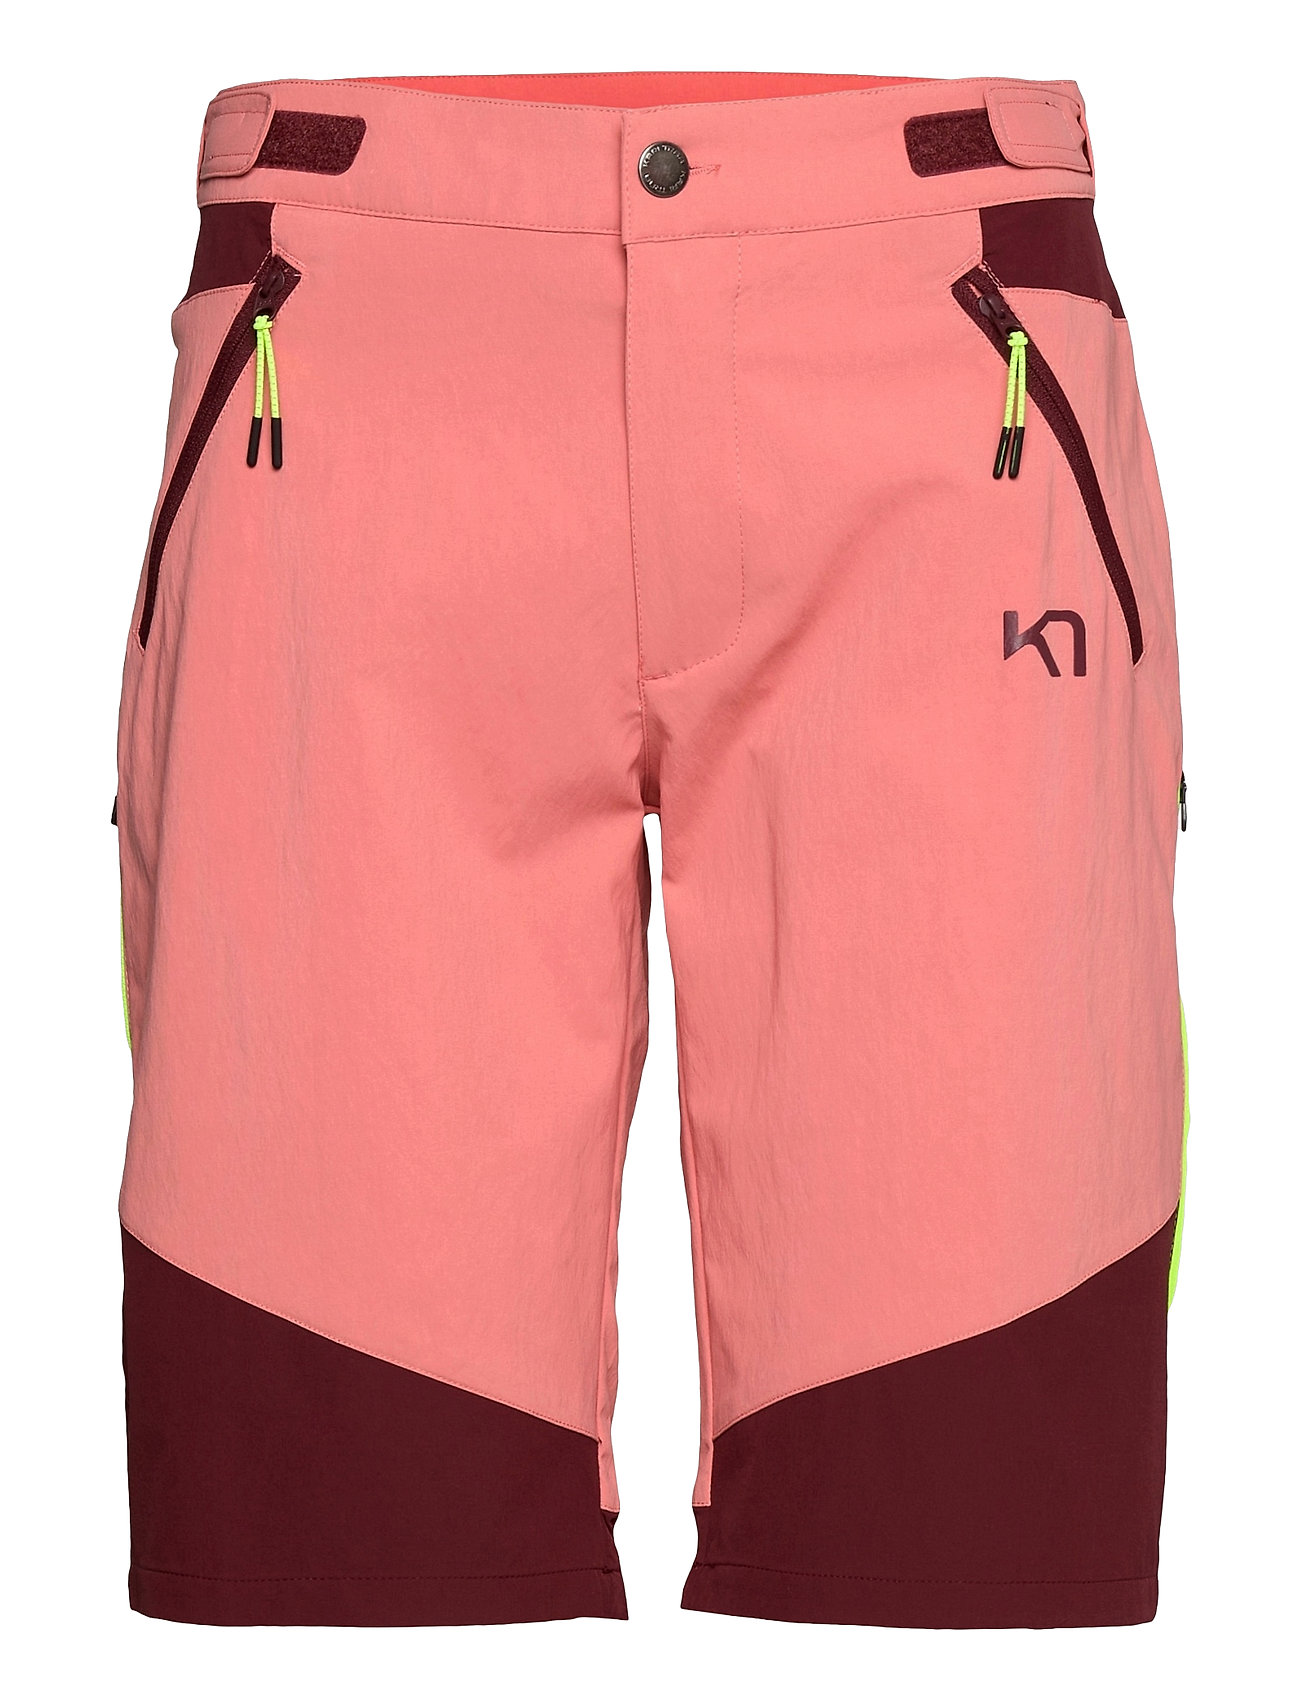 Sanne Shorts Shorts Sport Shorts Vaaleanpunainen Kari Traa